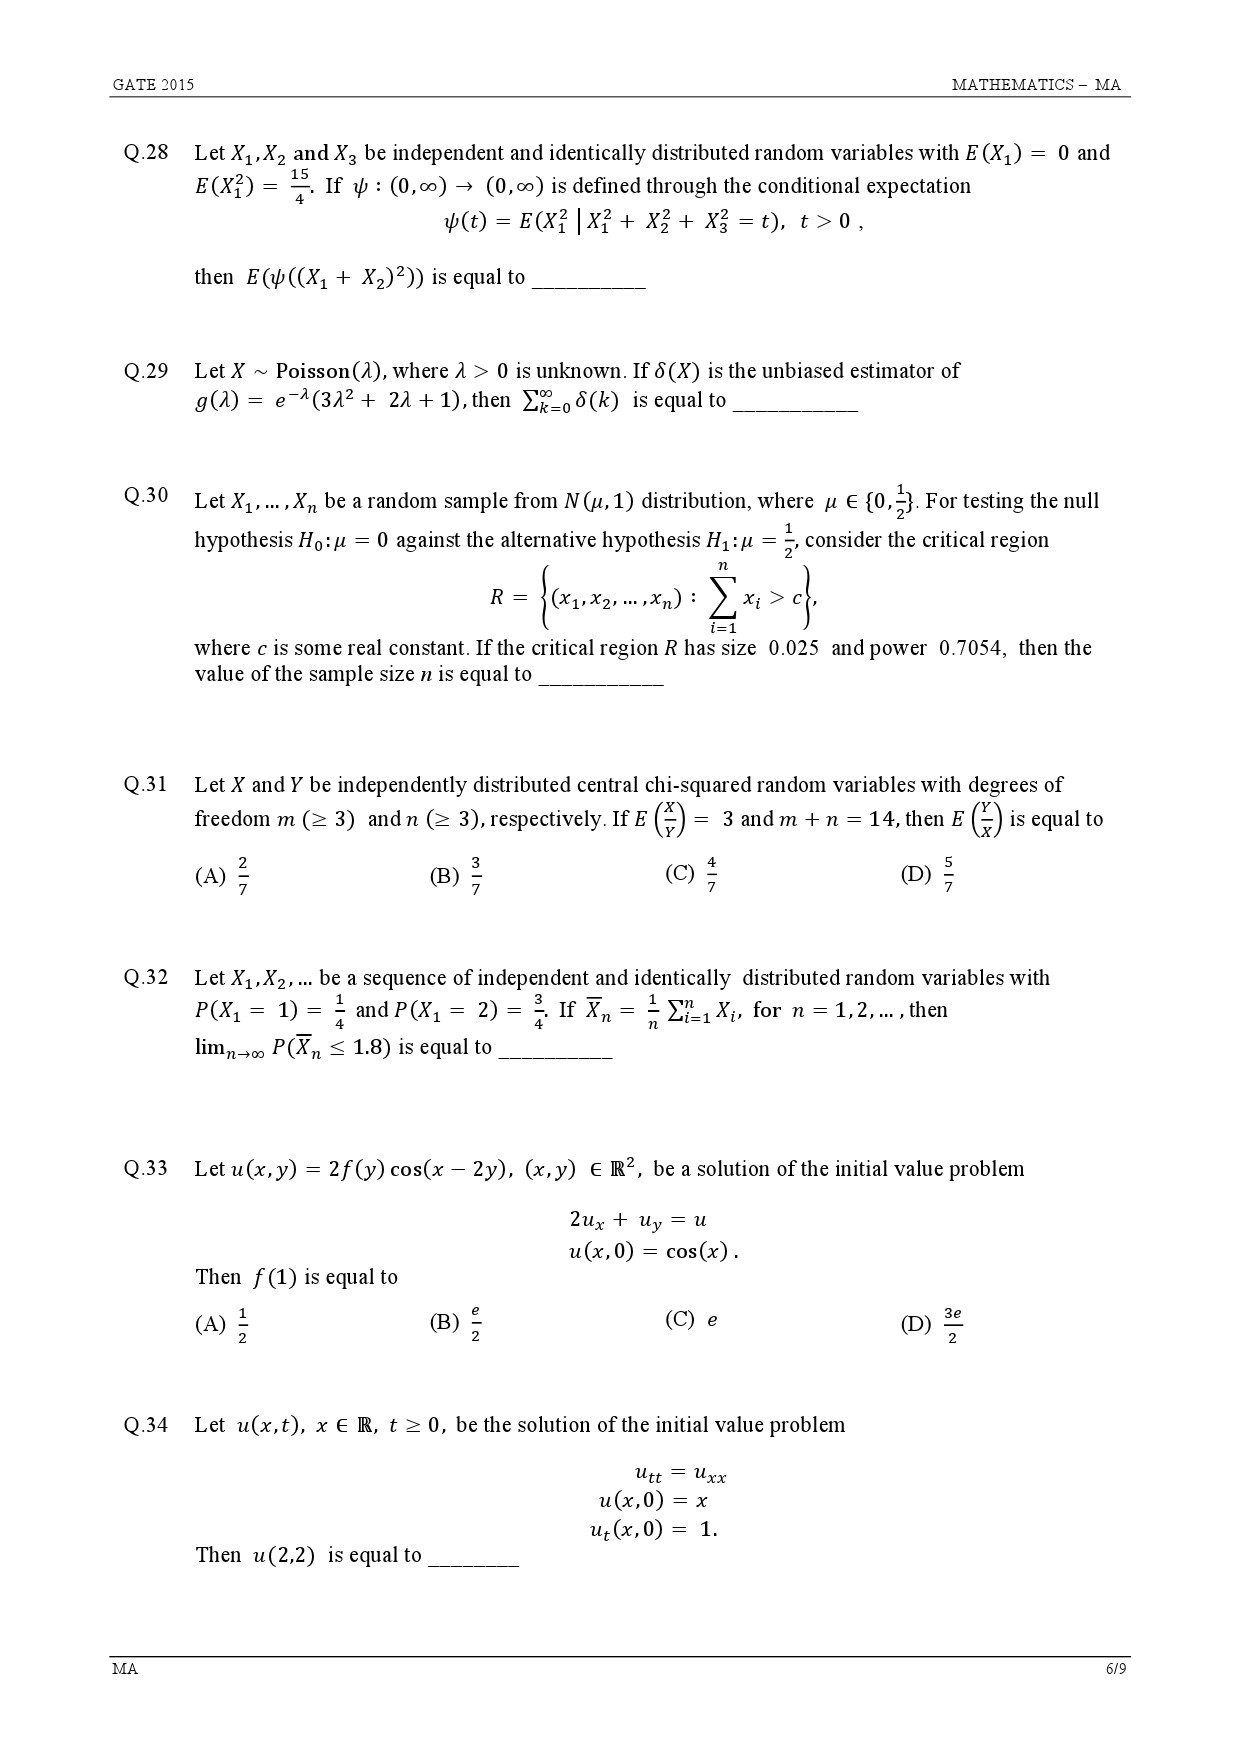 GATE Exam Question Paper 2015 Mathematics 6